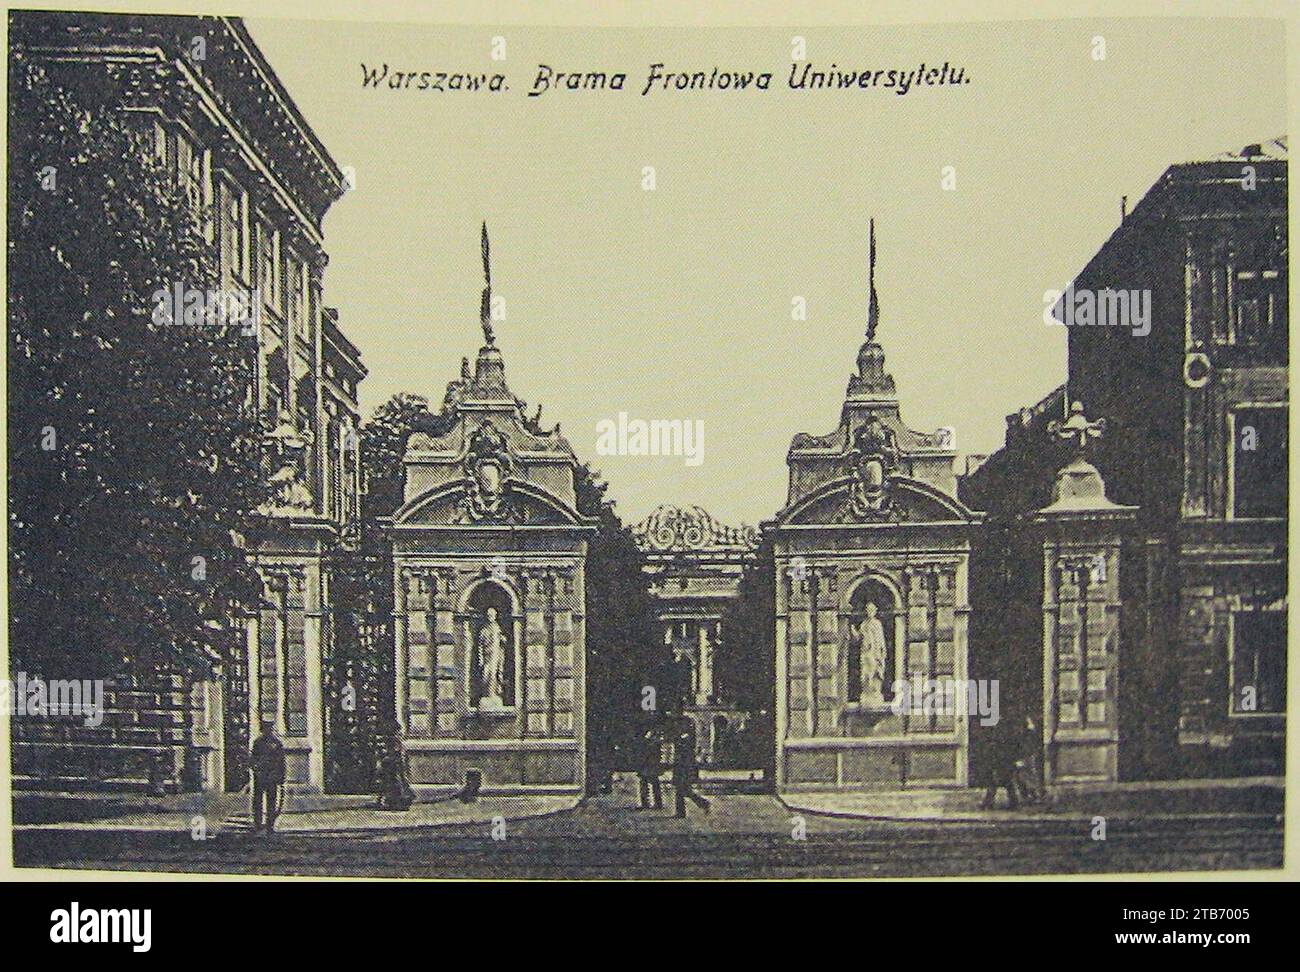 Warszawa Brama Uniwersytet Warszawski. Stock Photo